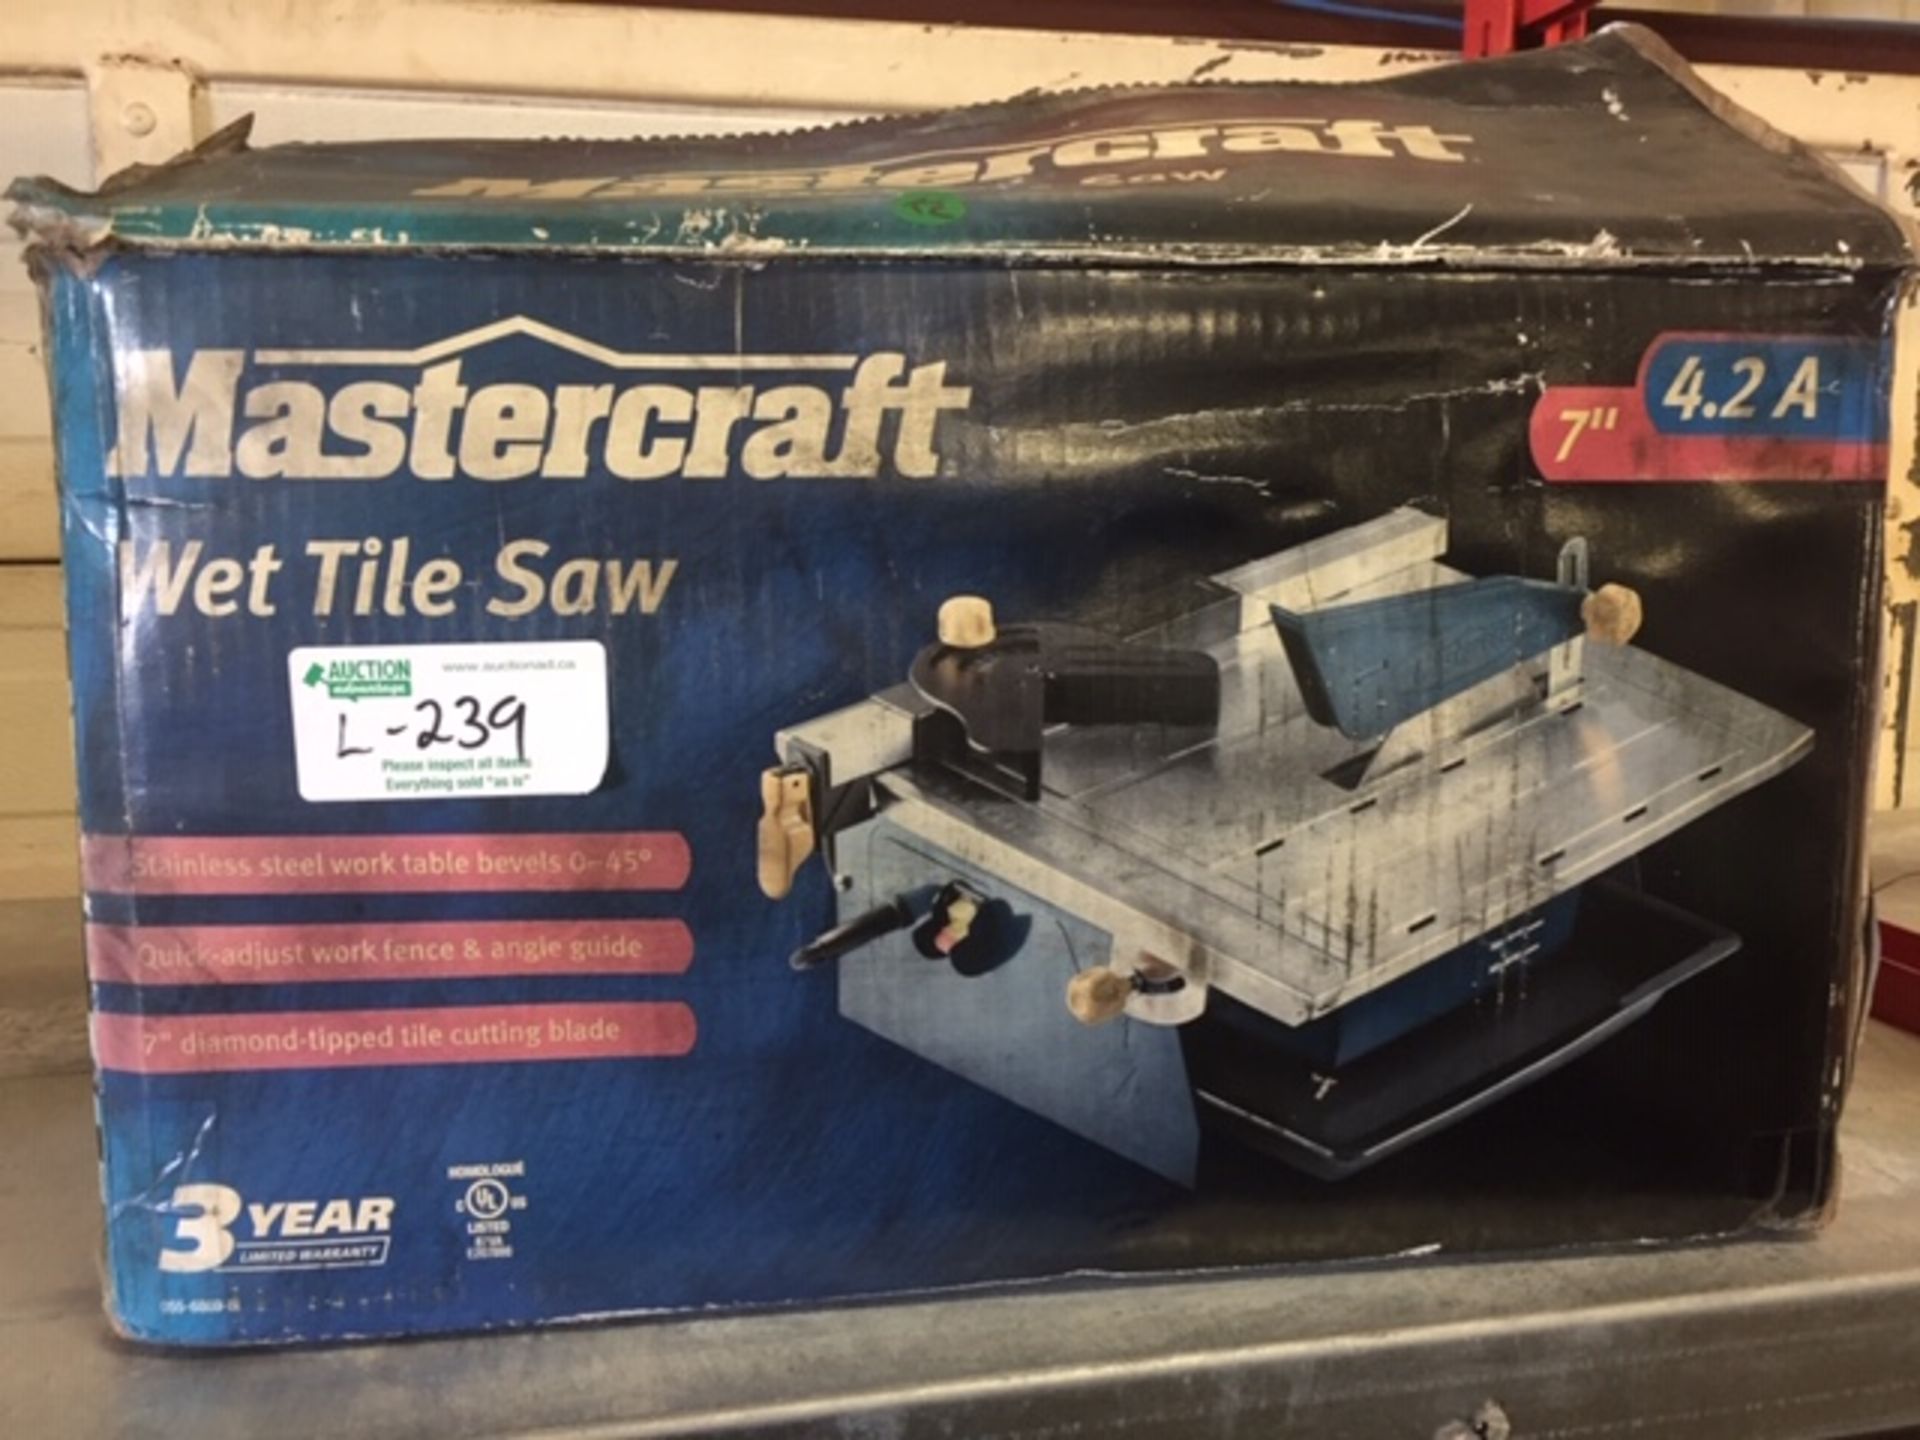 Mastercraft wet tile saw